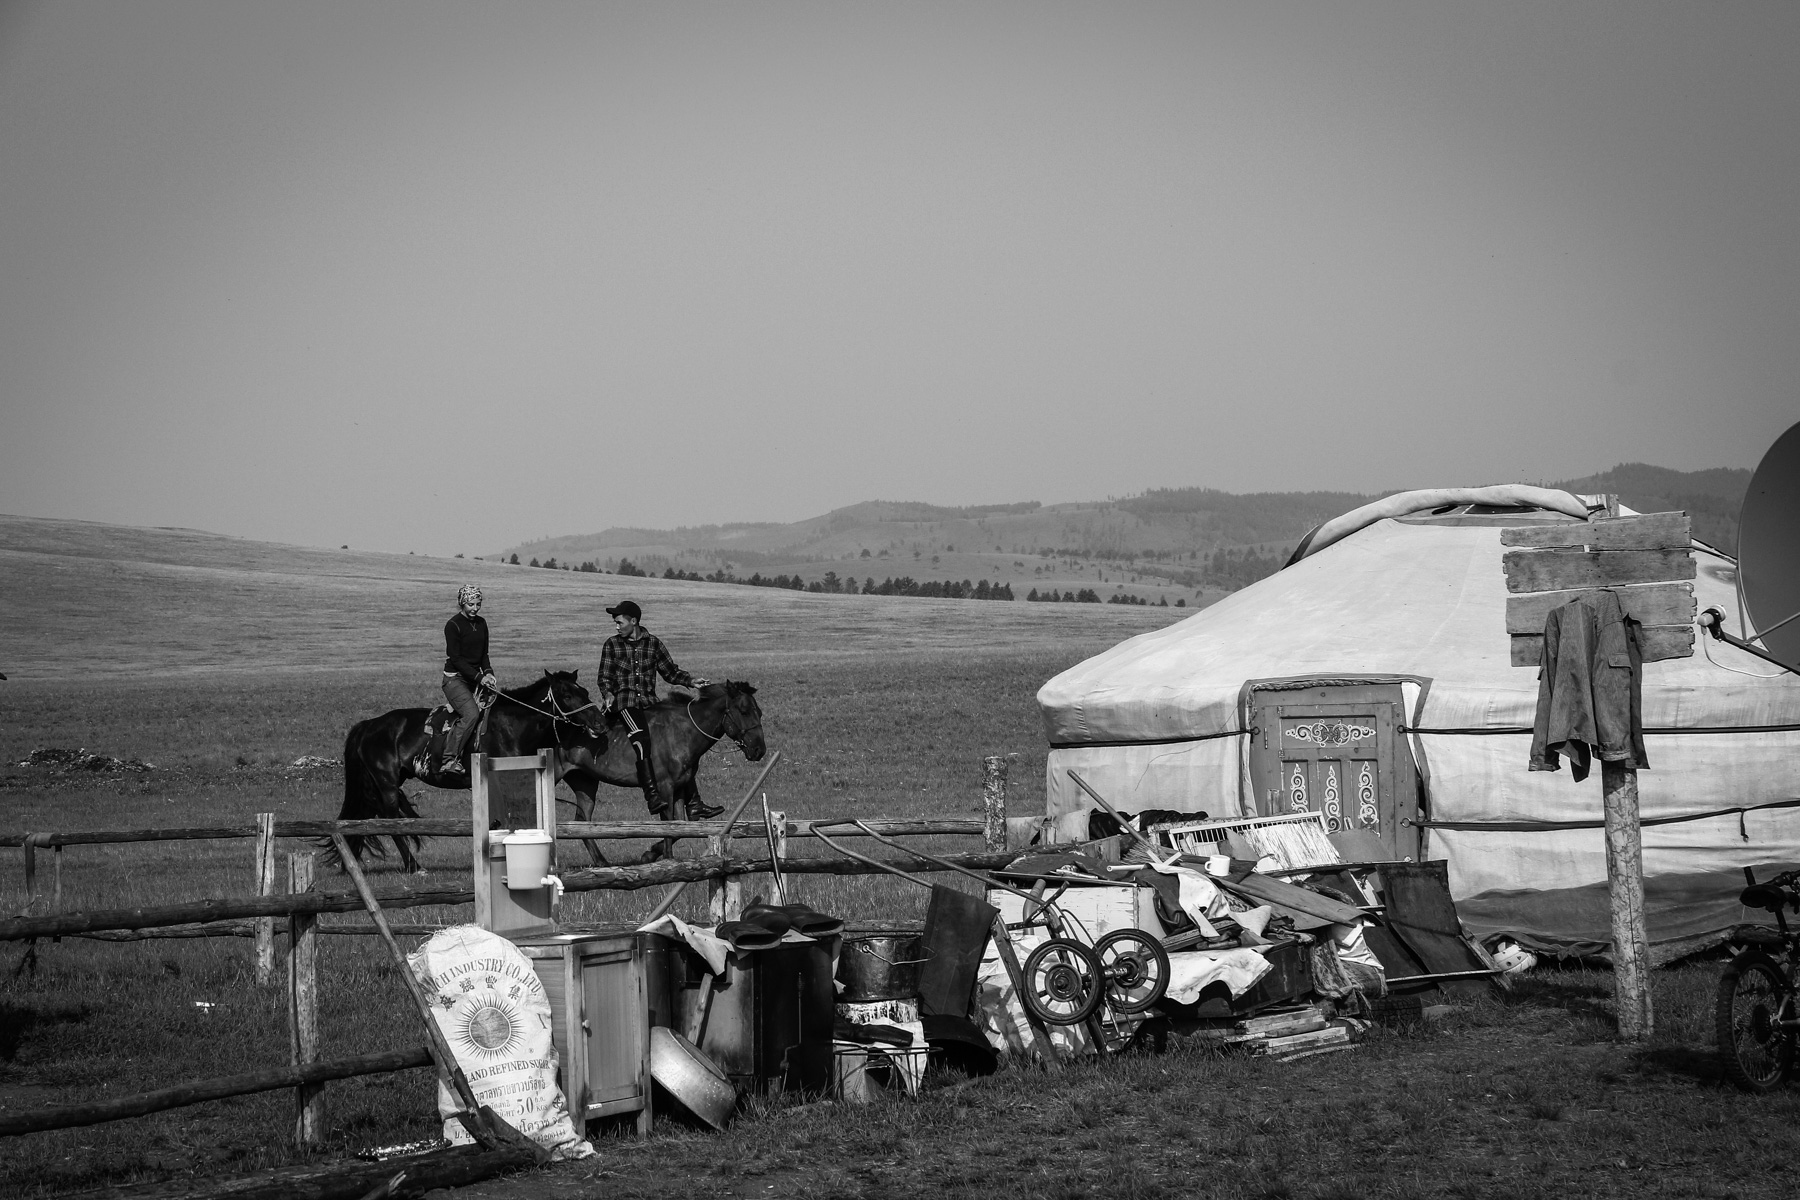 Ancient mobile pastoralism